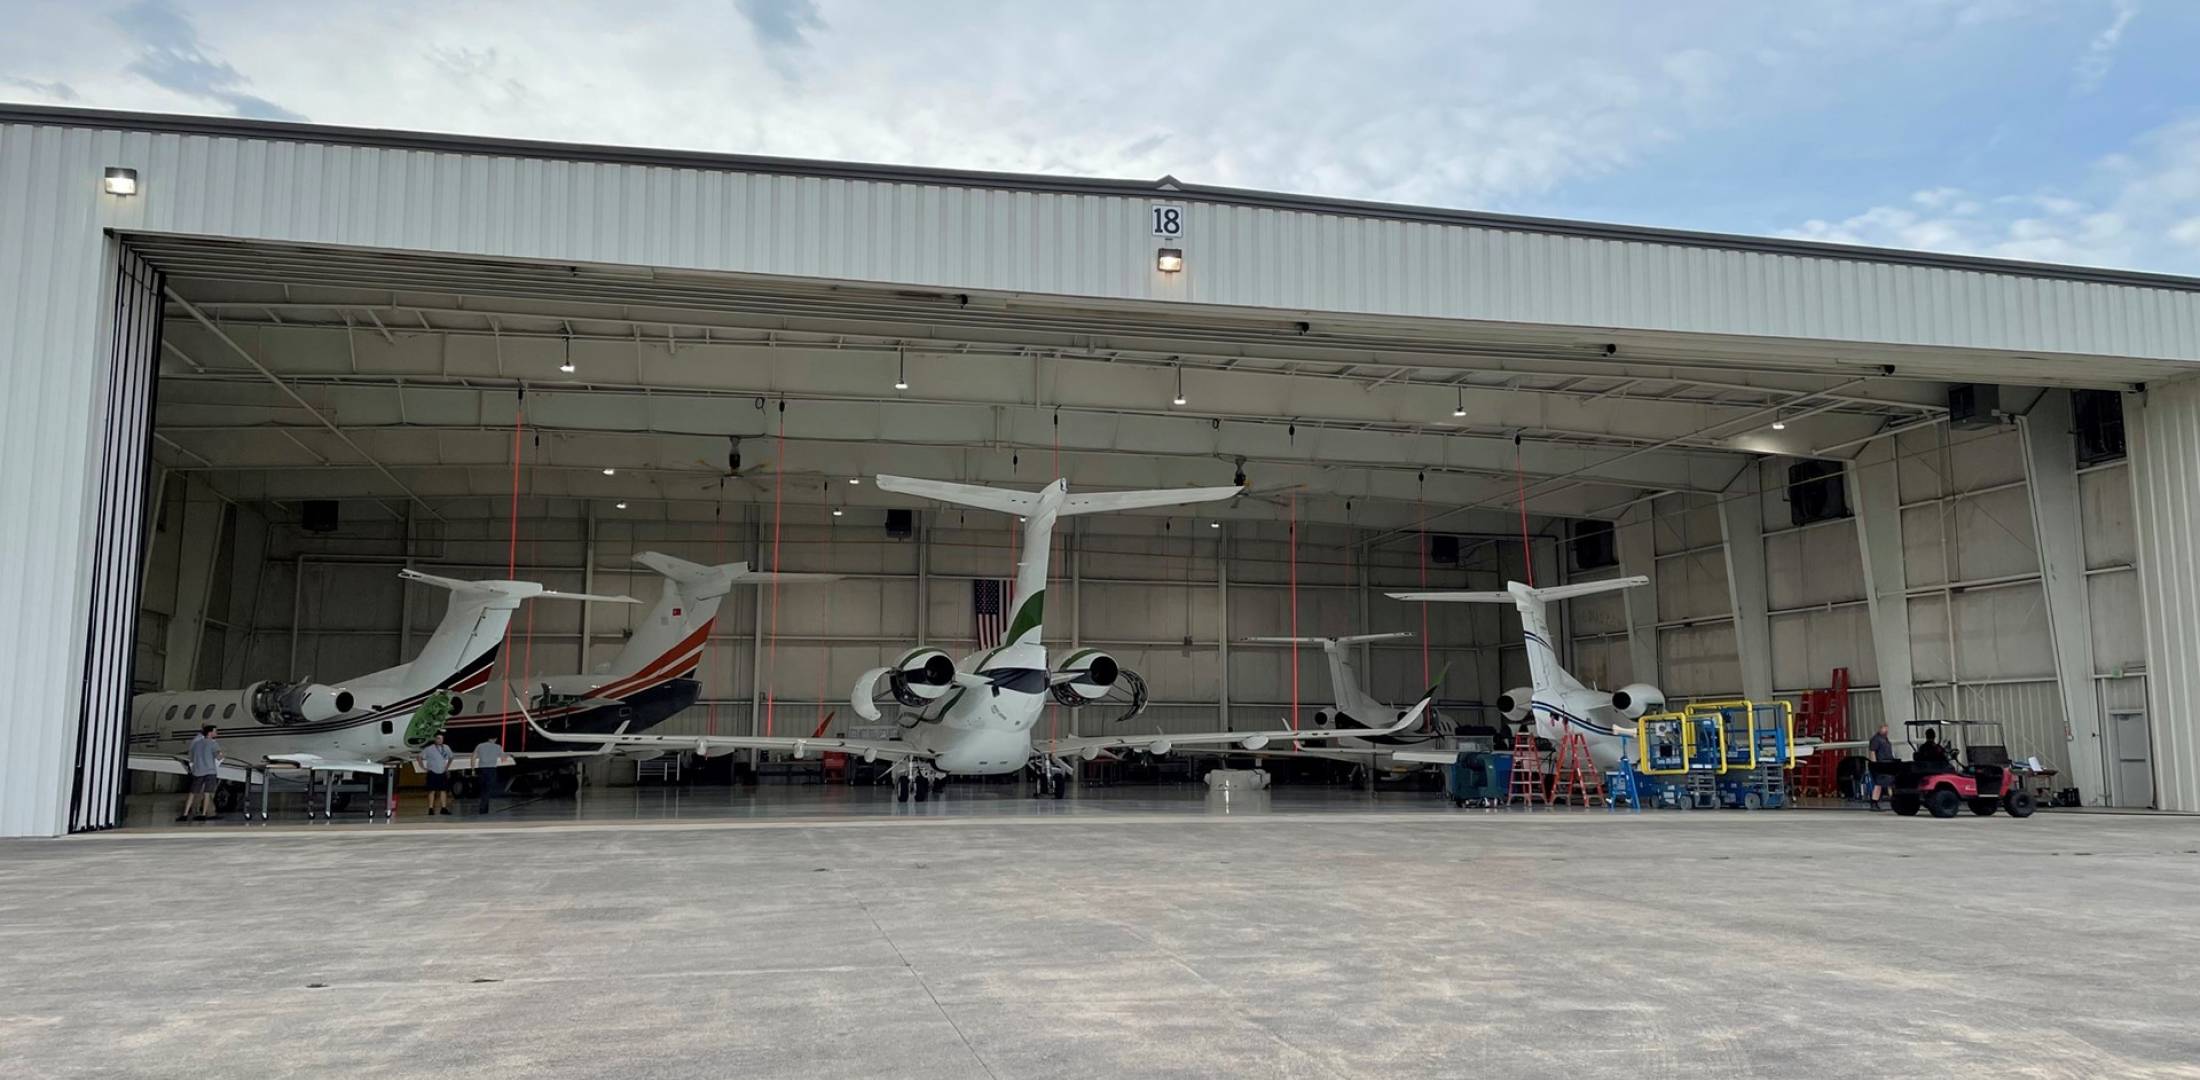 West Star Aviation Embraer support center hangar with business jets parked inside